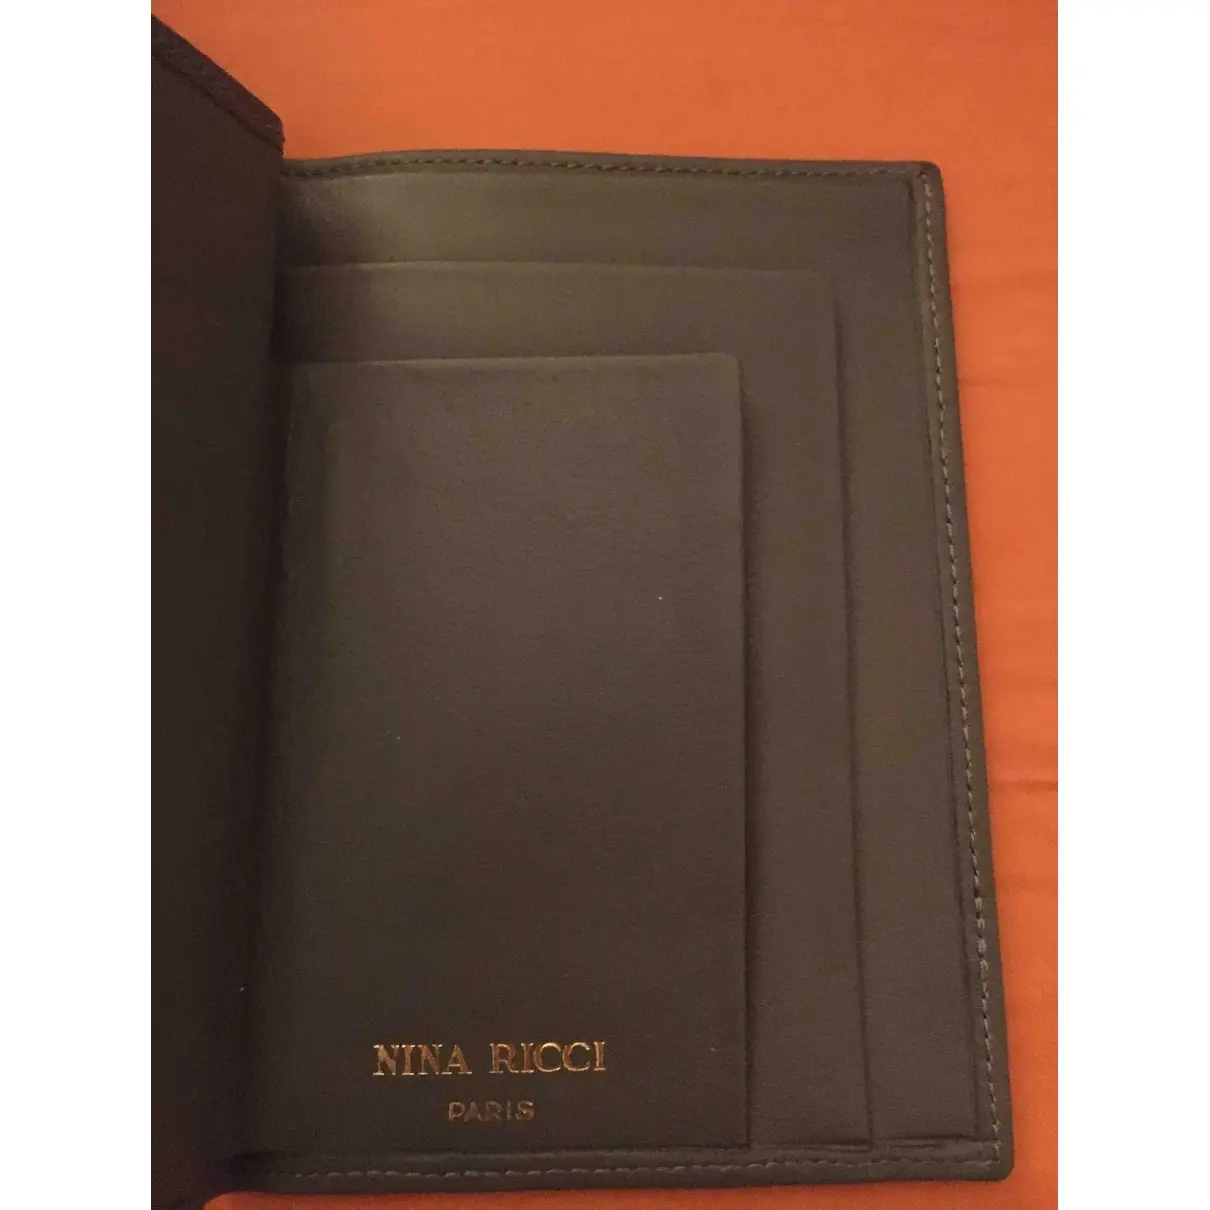 Nina Ricci Leather small bag for sale - Vintage